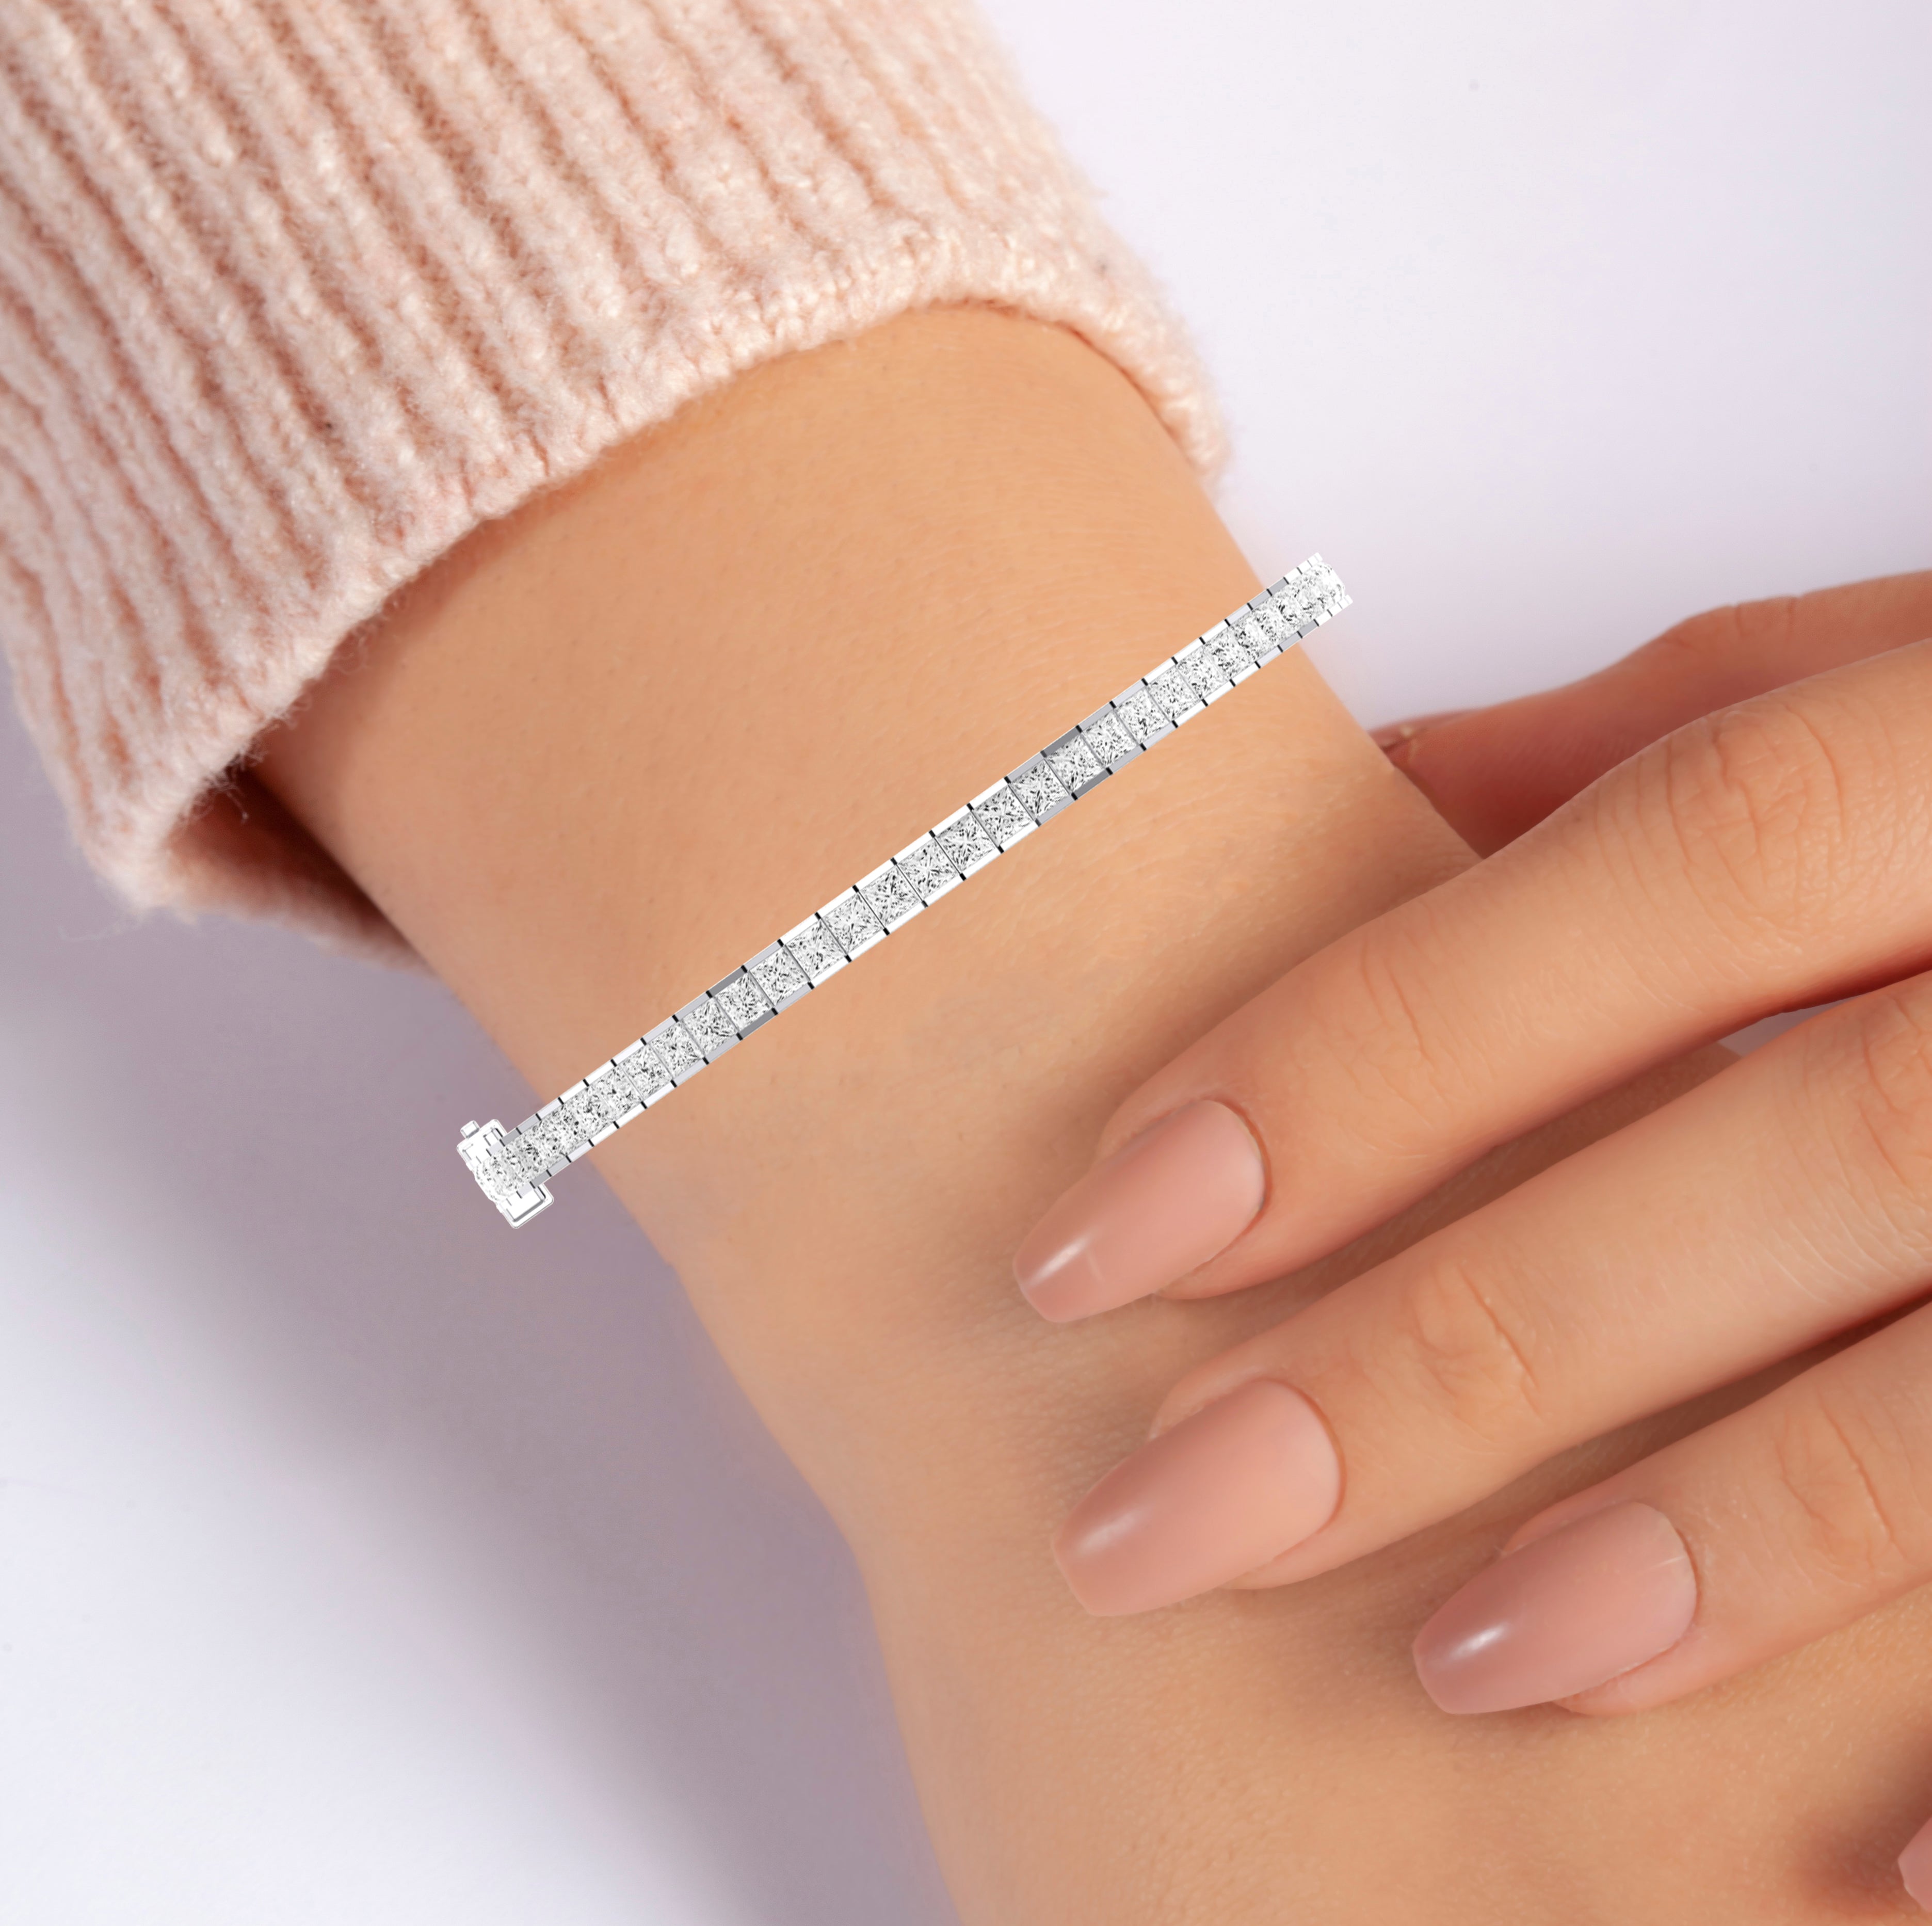 18k White Gold Invisible Set Princess Cut Diamond Bangle Bracelet HOB VS G  | eBay